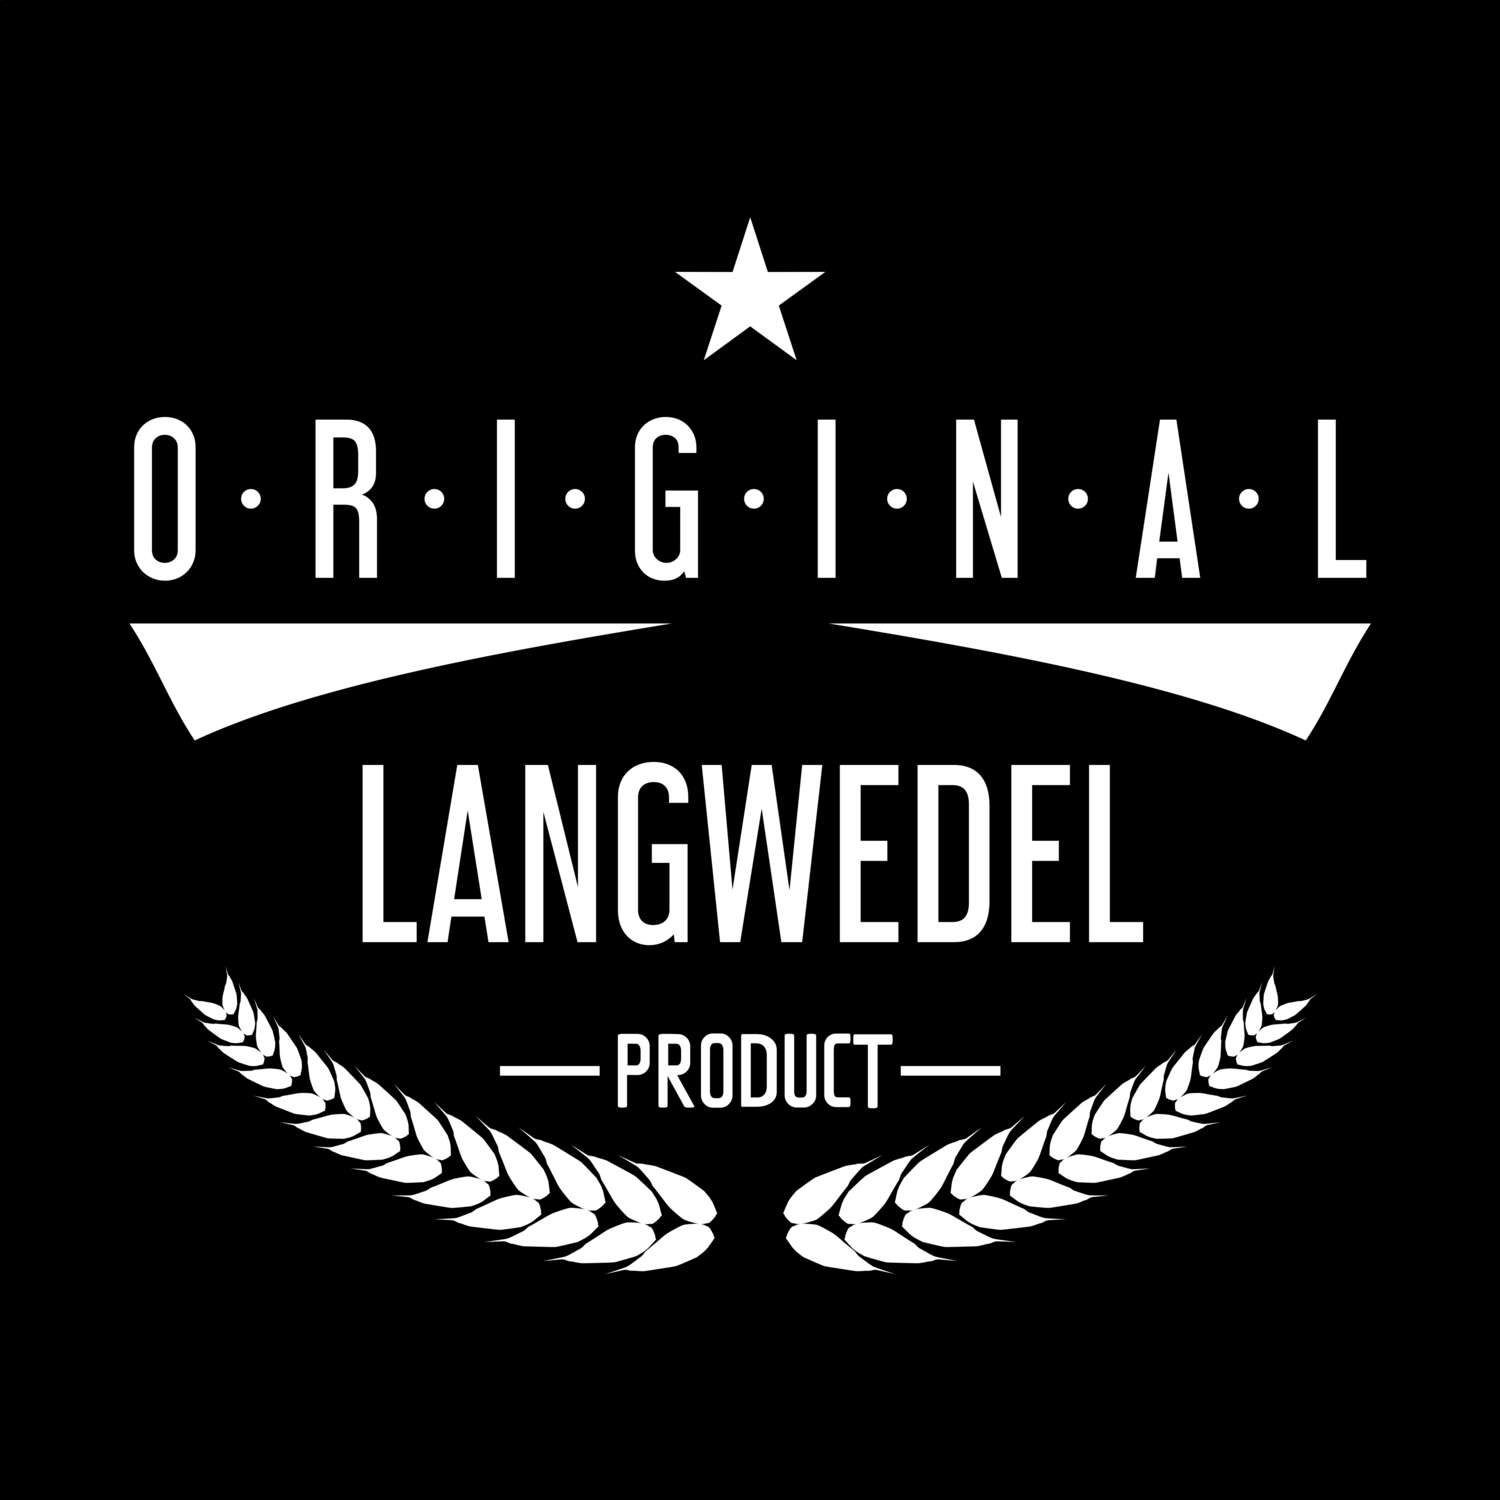 Langwedel T-Shirt »Original Product«